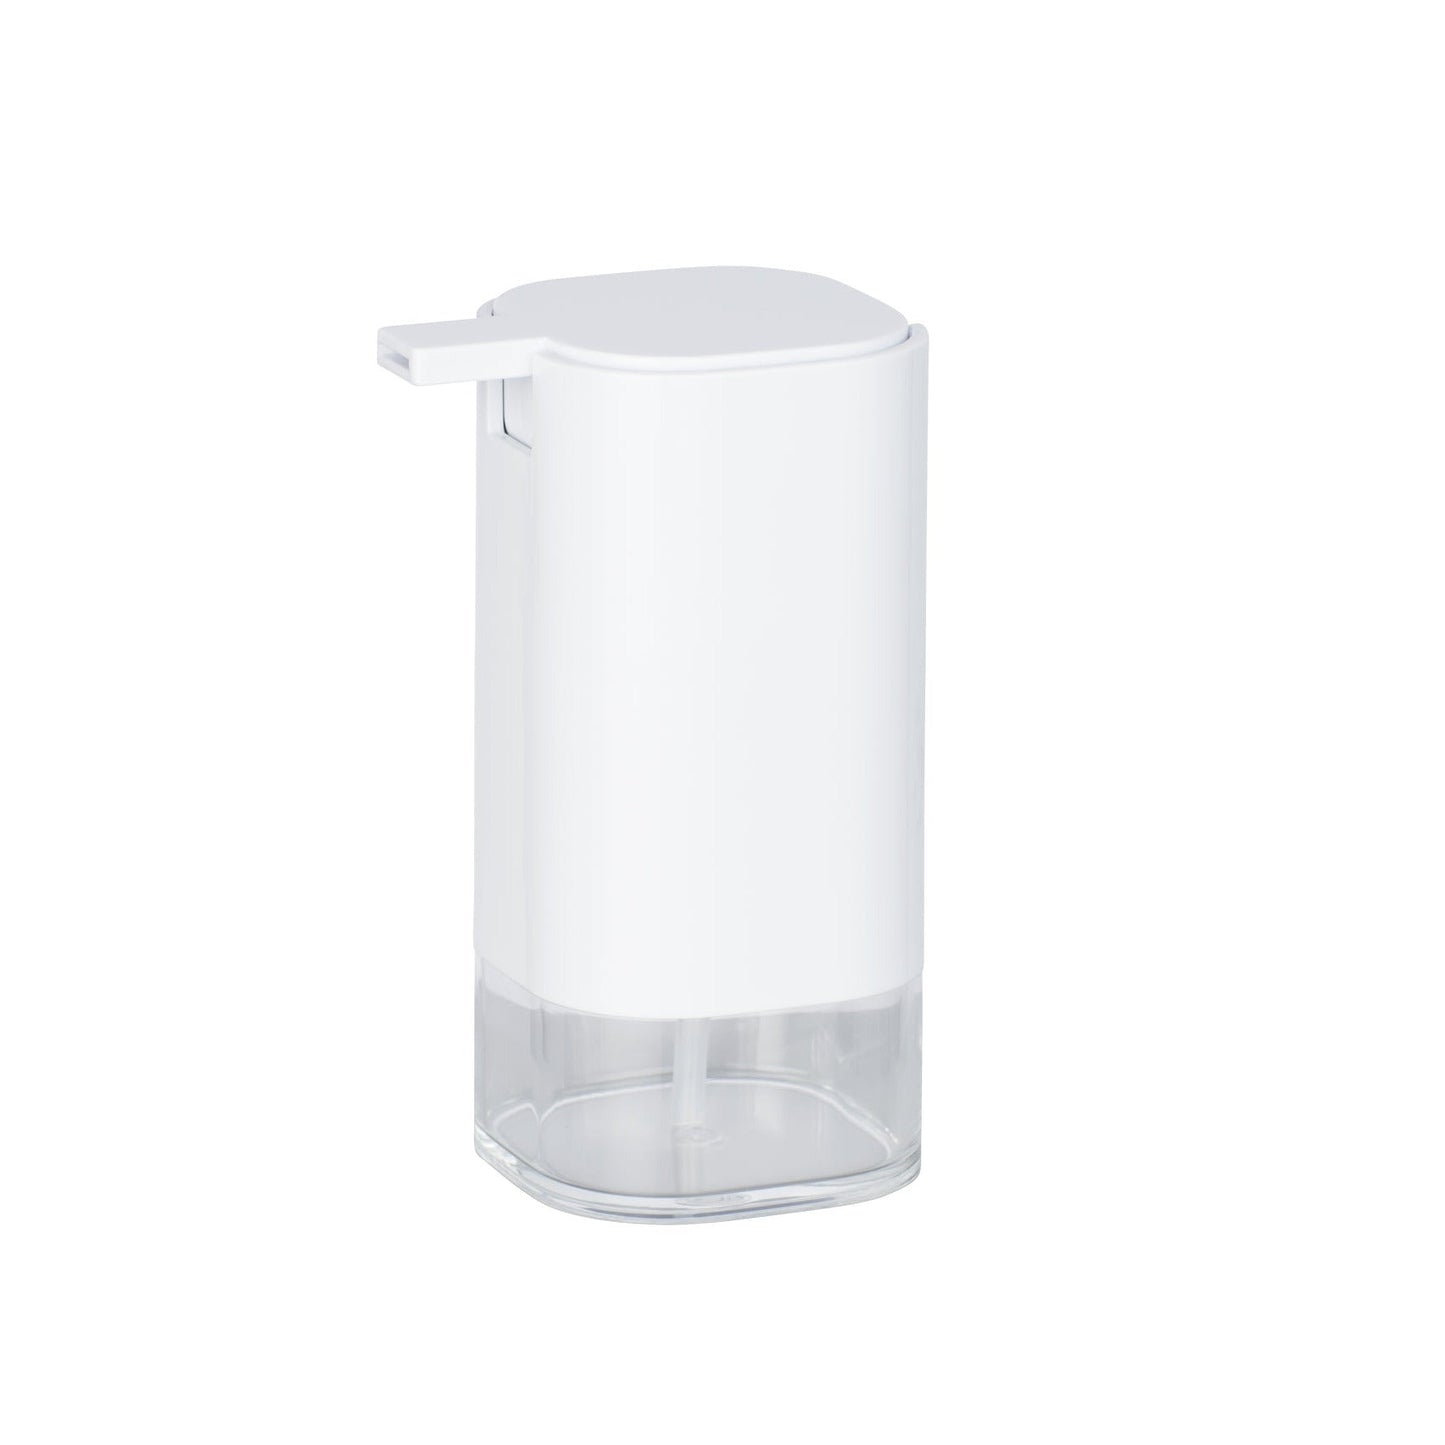 Soap Dispenser - Oria Range - White & Clear